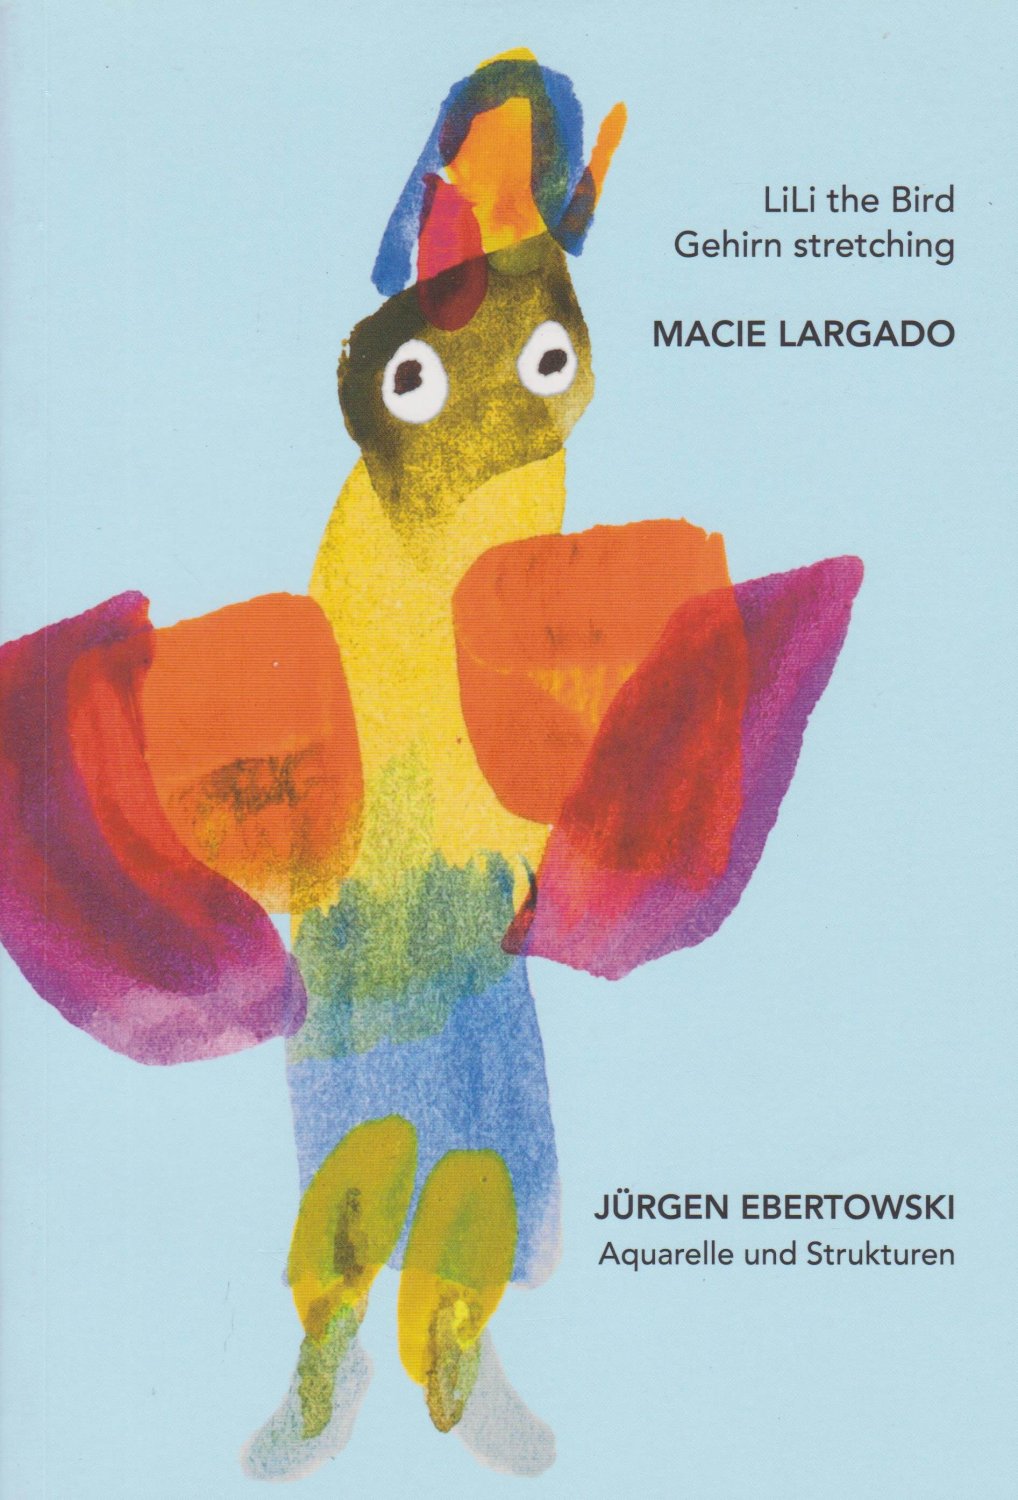 EBERTOWSKI, Jürgen / Macie LARGADO:  Lagardo, LiLi the Bird. Gehirn stretching. Ebertowski, Aquarelle und Strukturen. 